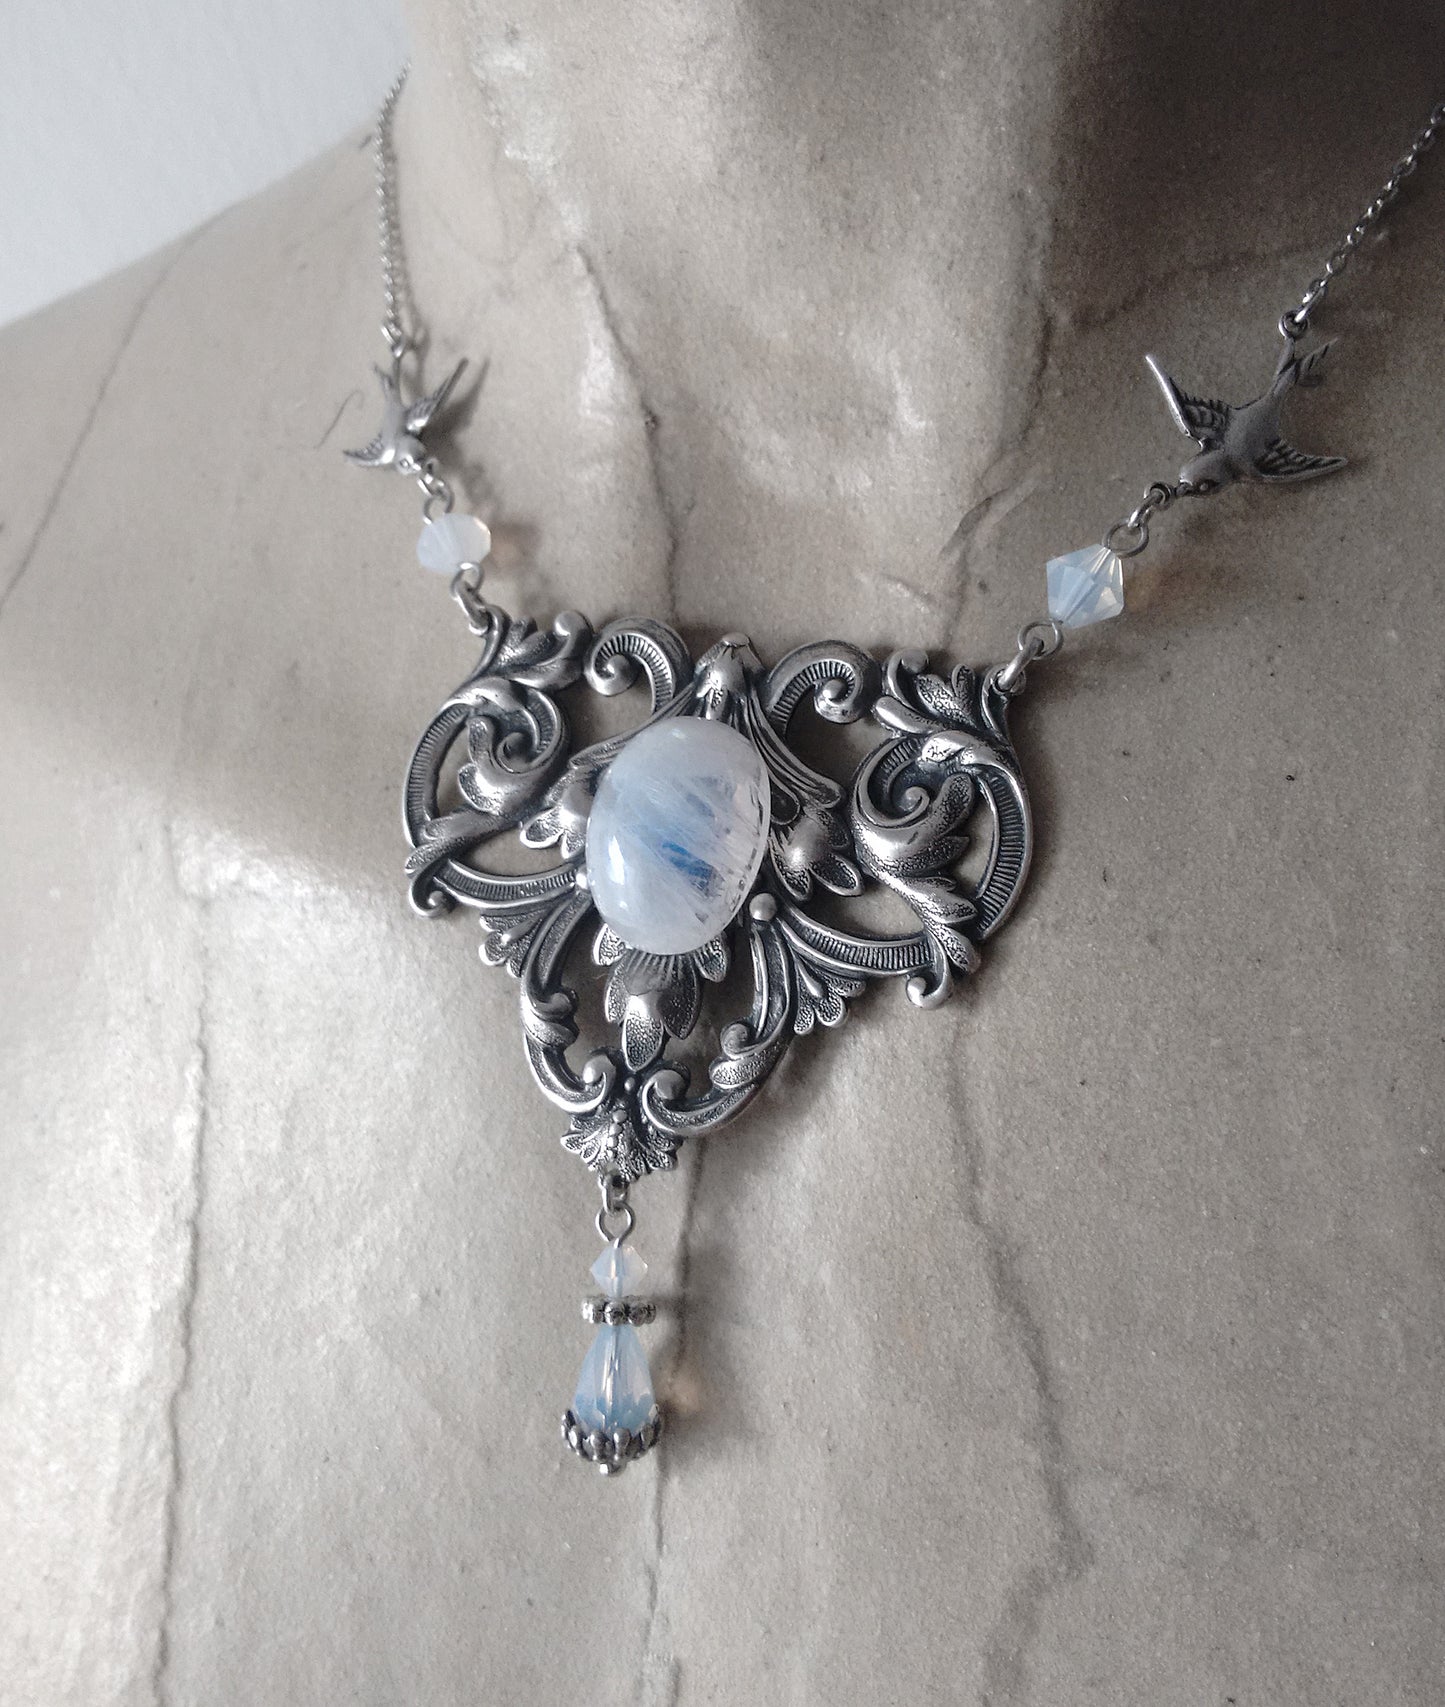 Moonstone Necklace with Opal Swarovski